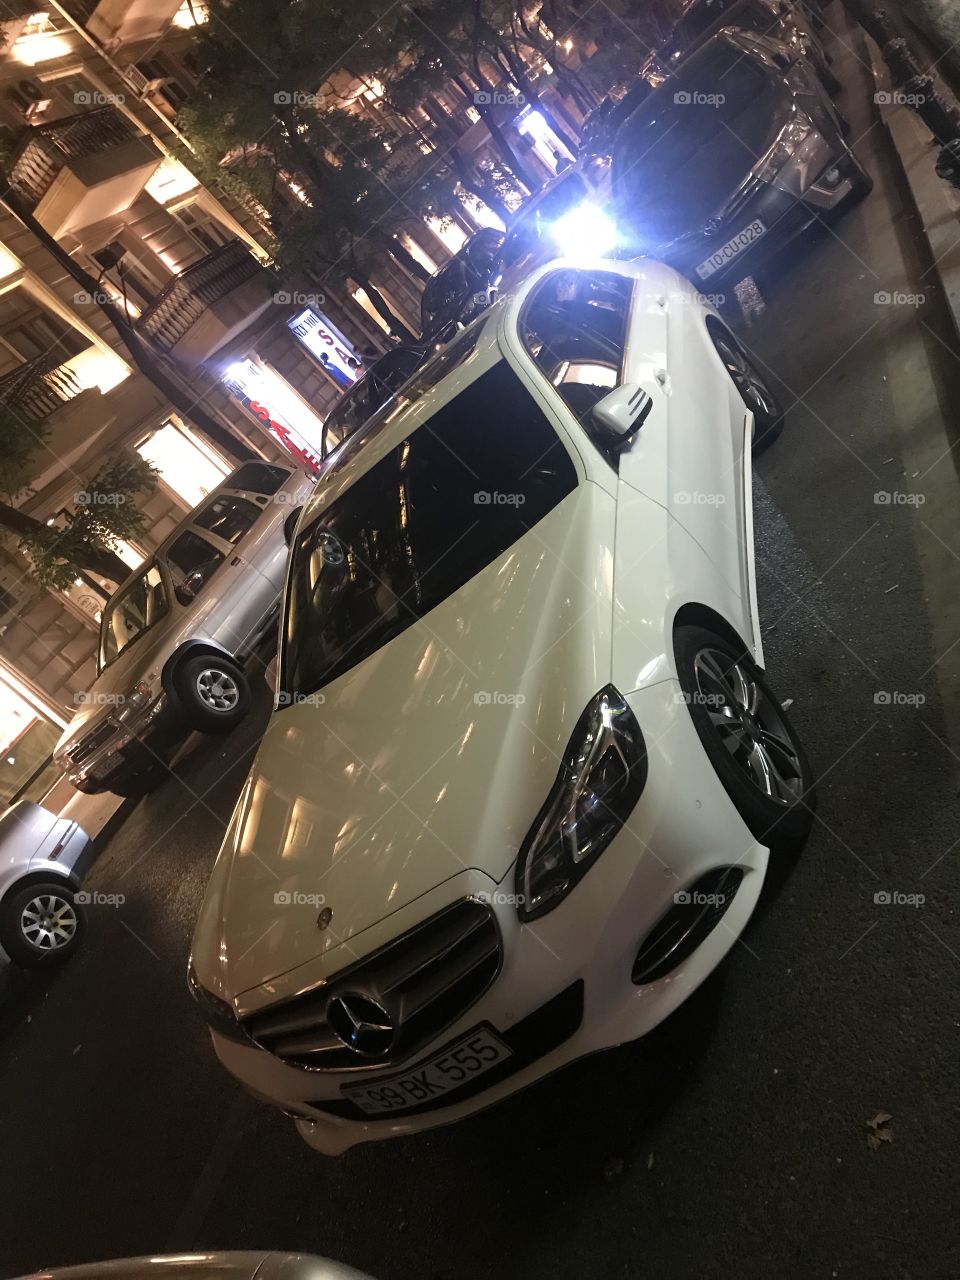 Mercedes all white shining bright 